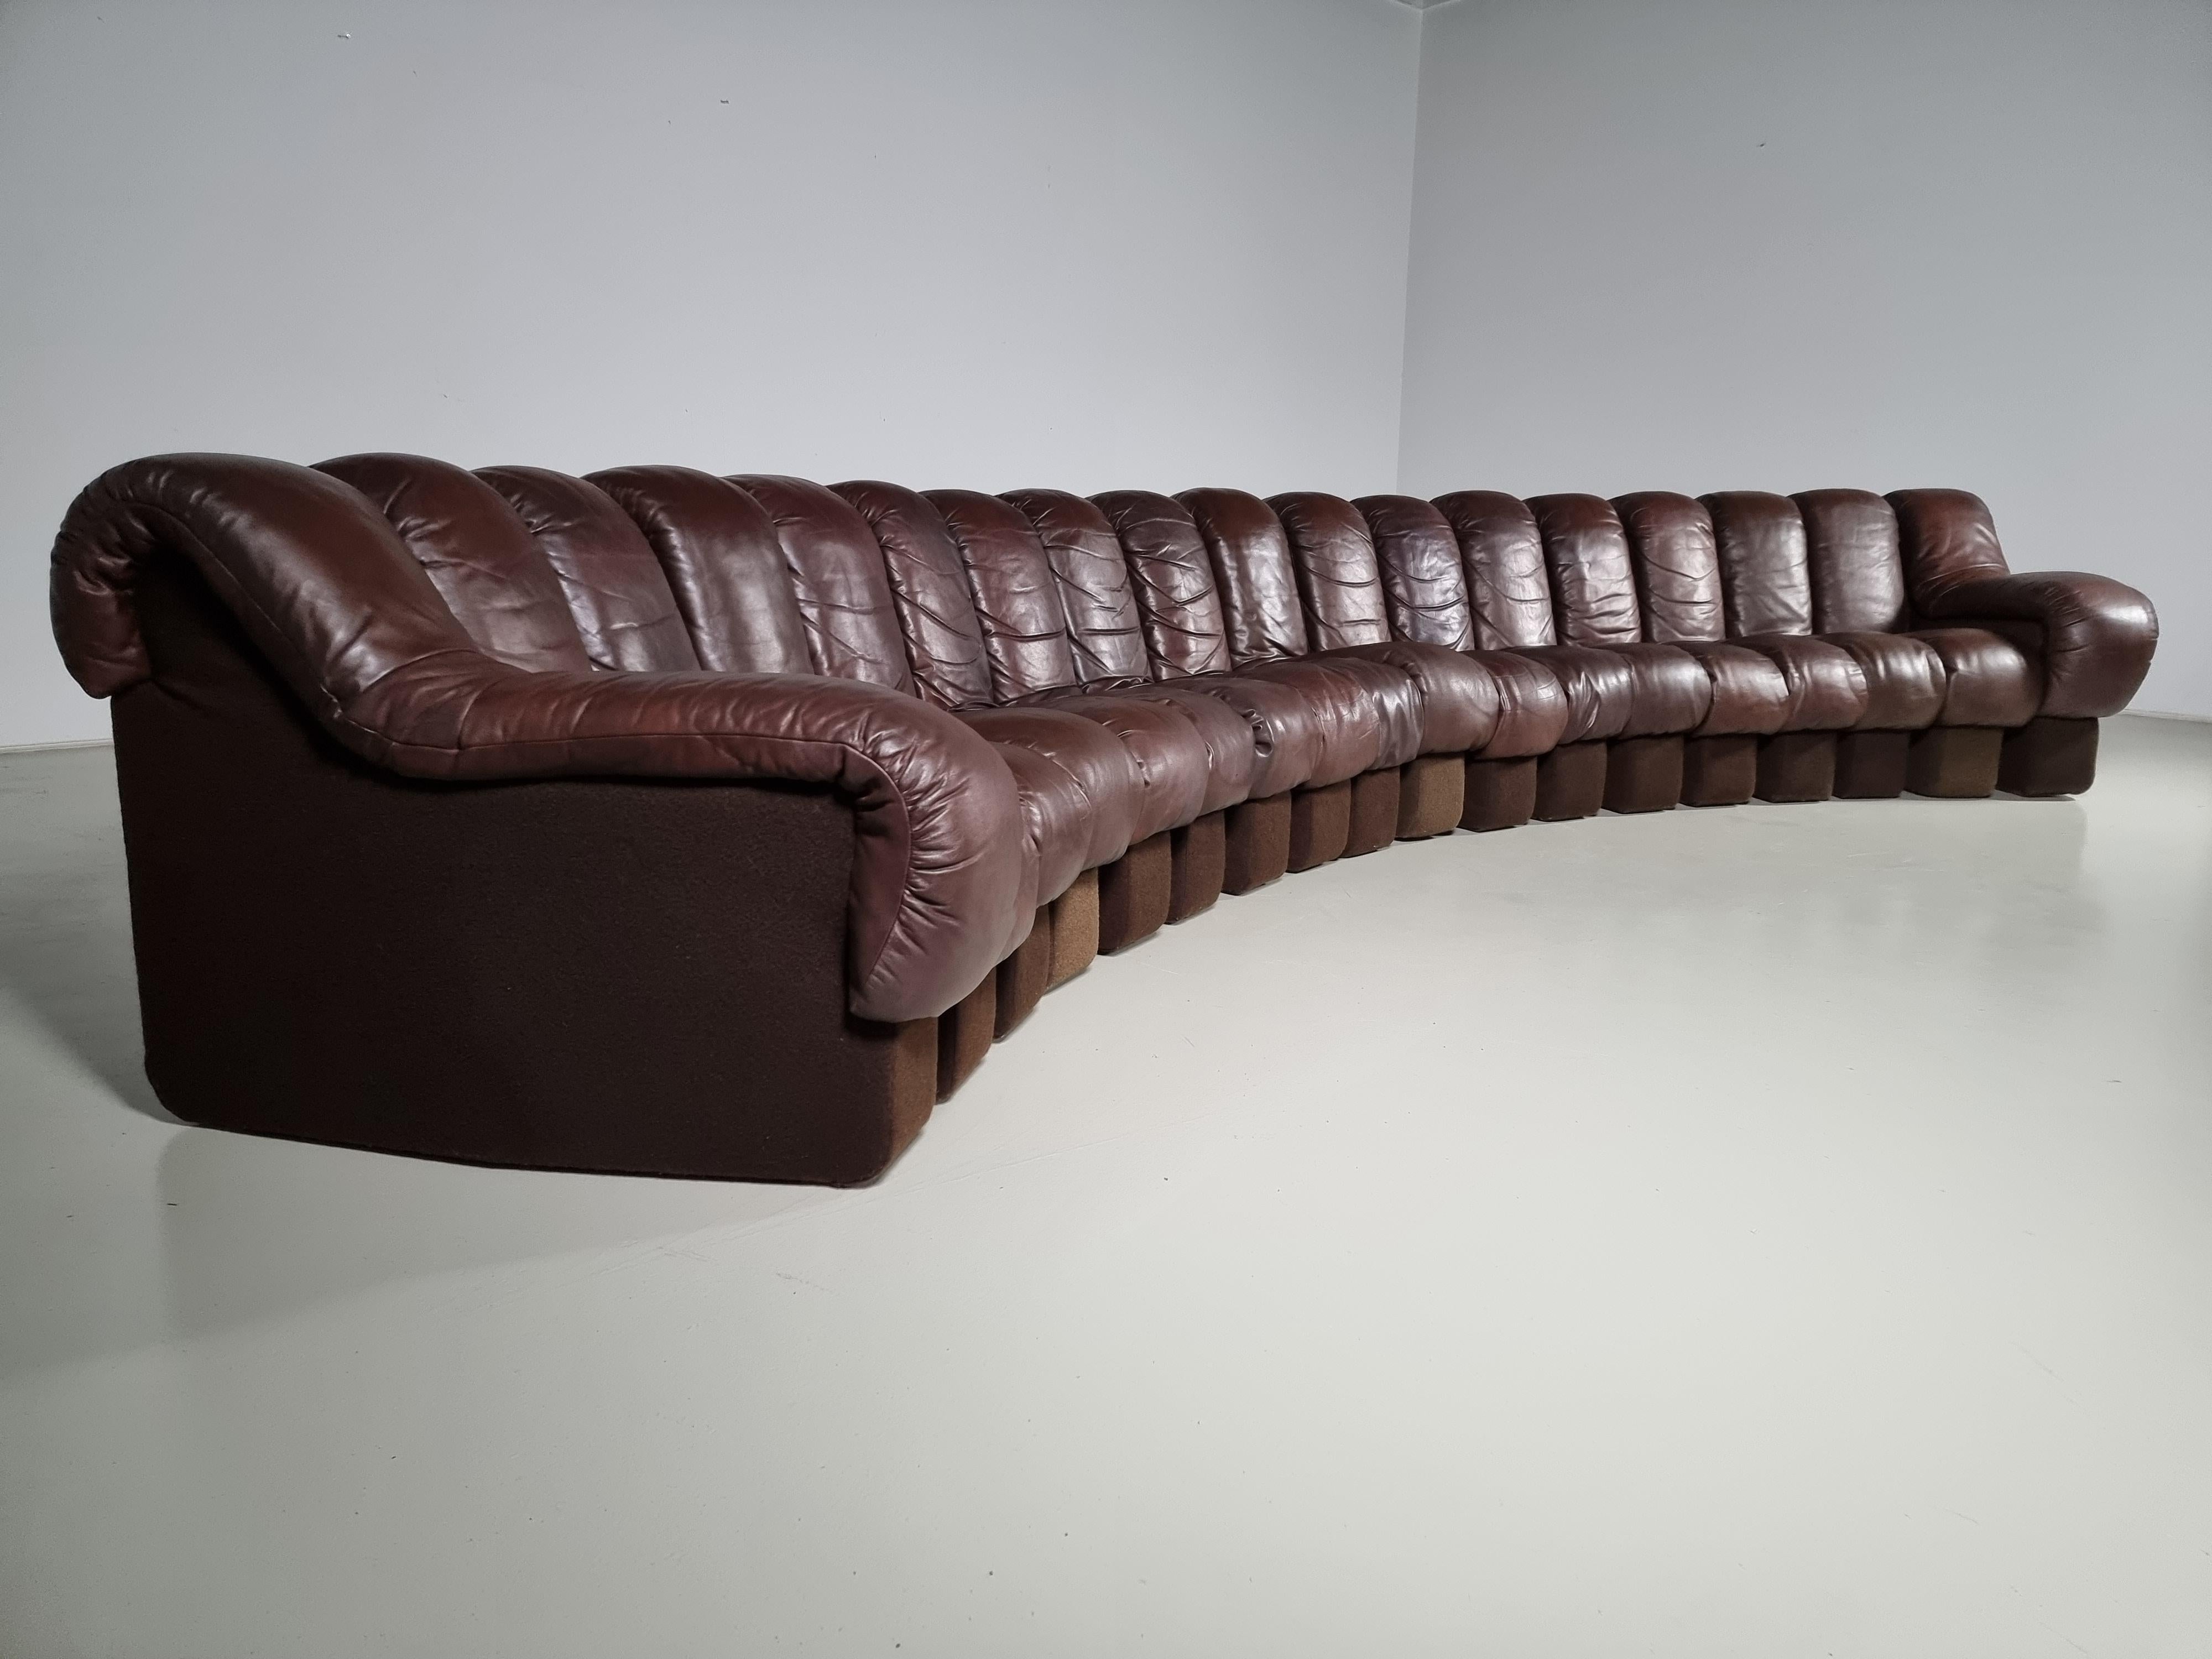 European Ds-600 'Snake' Sofa in Original Leather by De Sede Switzerland, 1970s